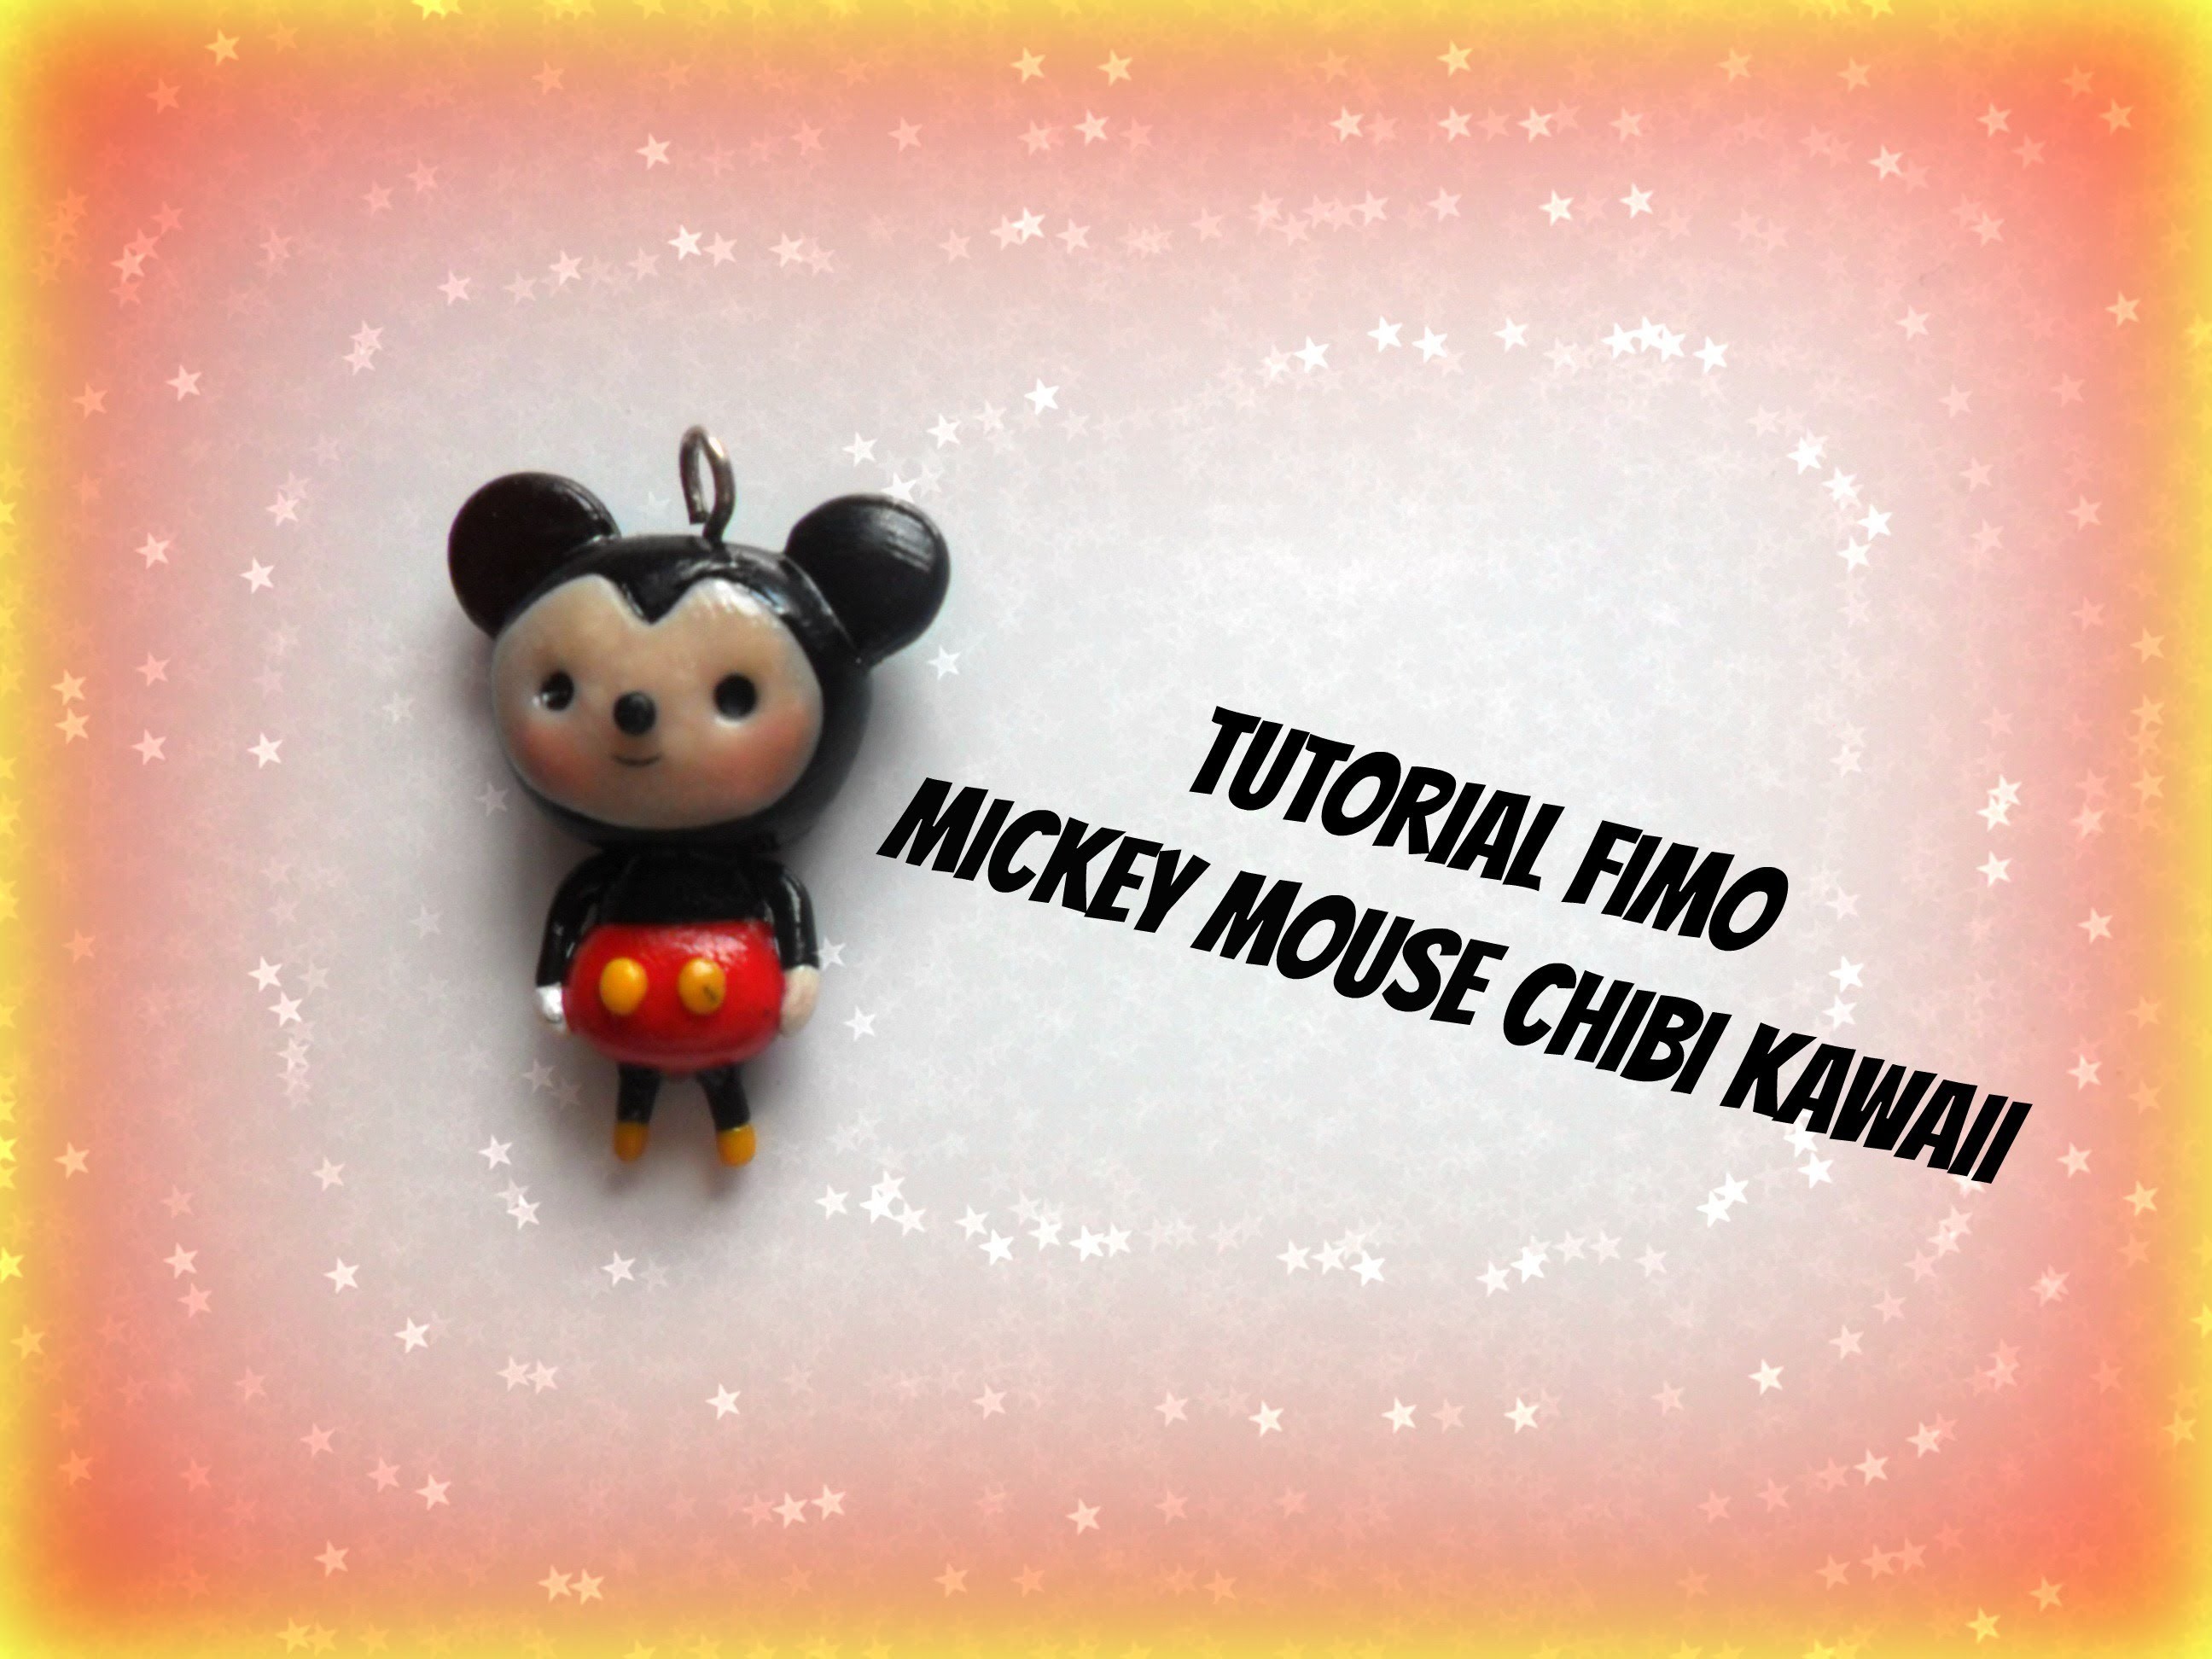 Tutorial Fimo Mickey Mouse chibi kawaii